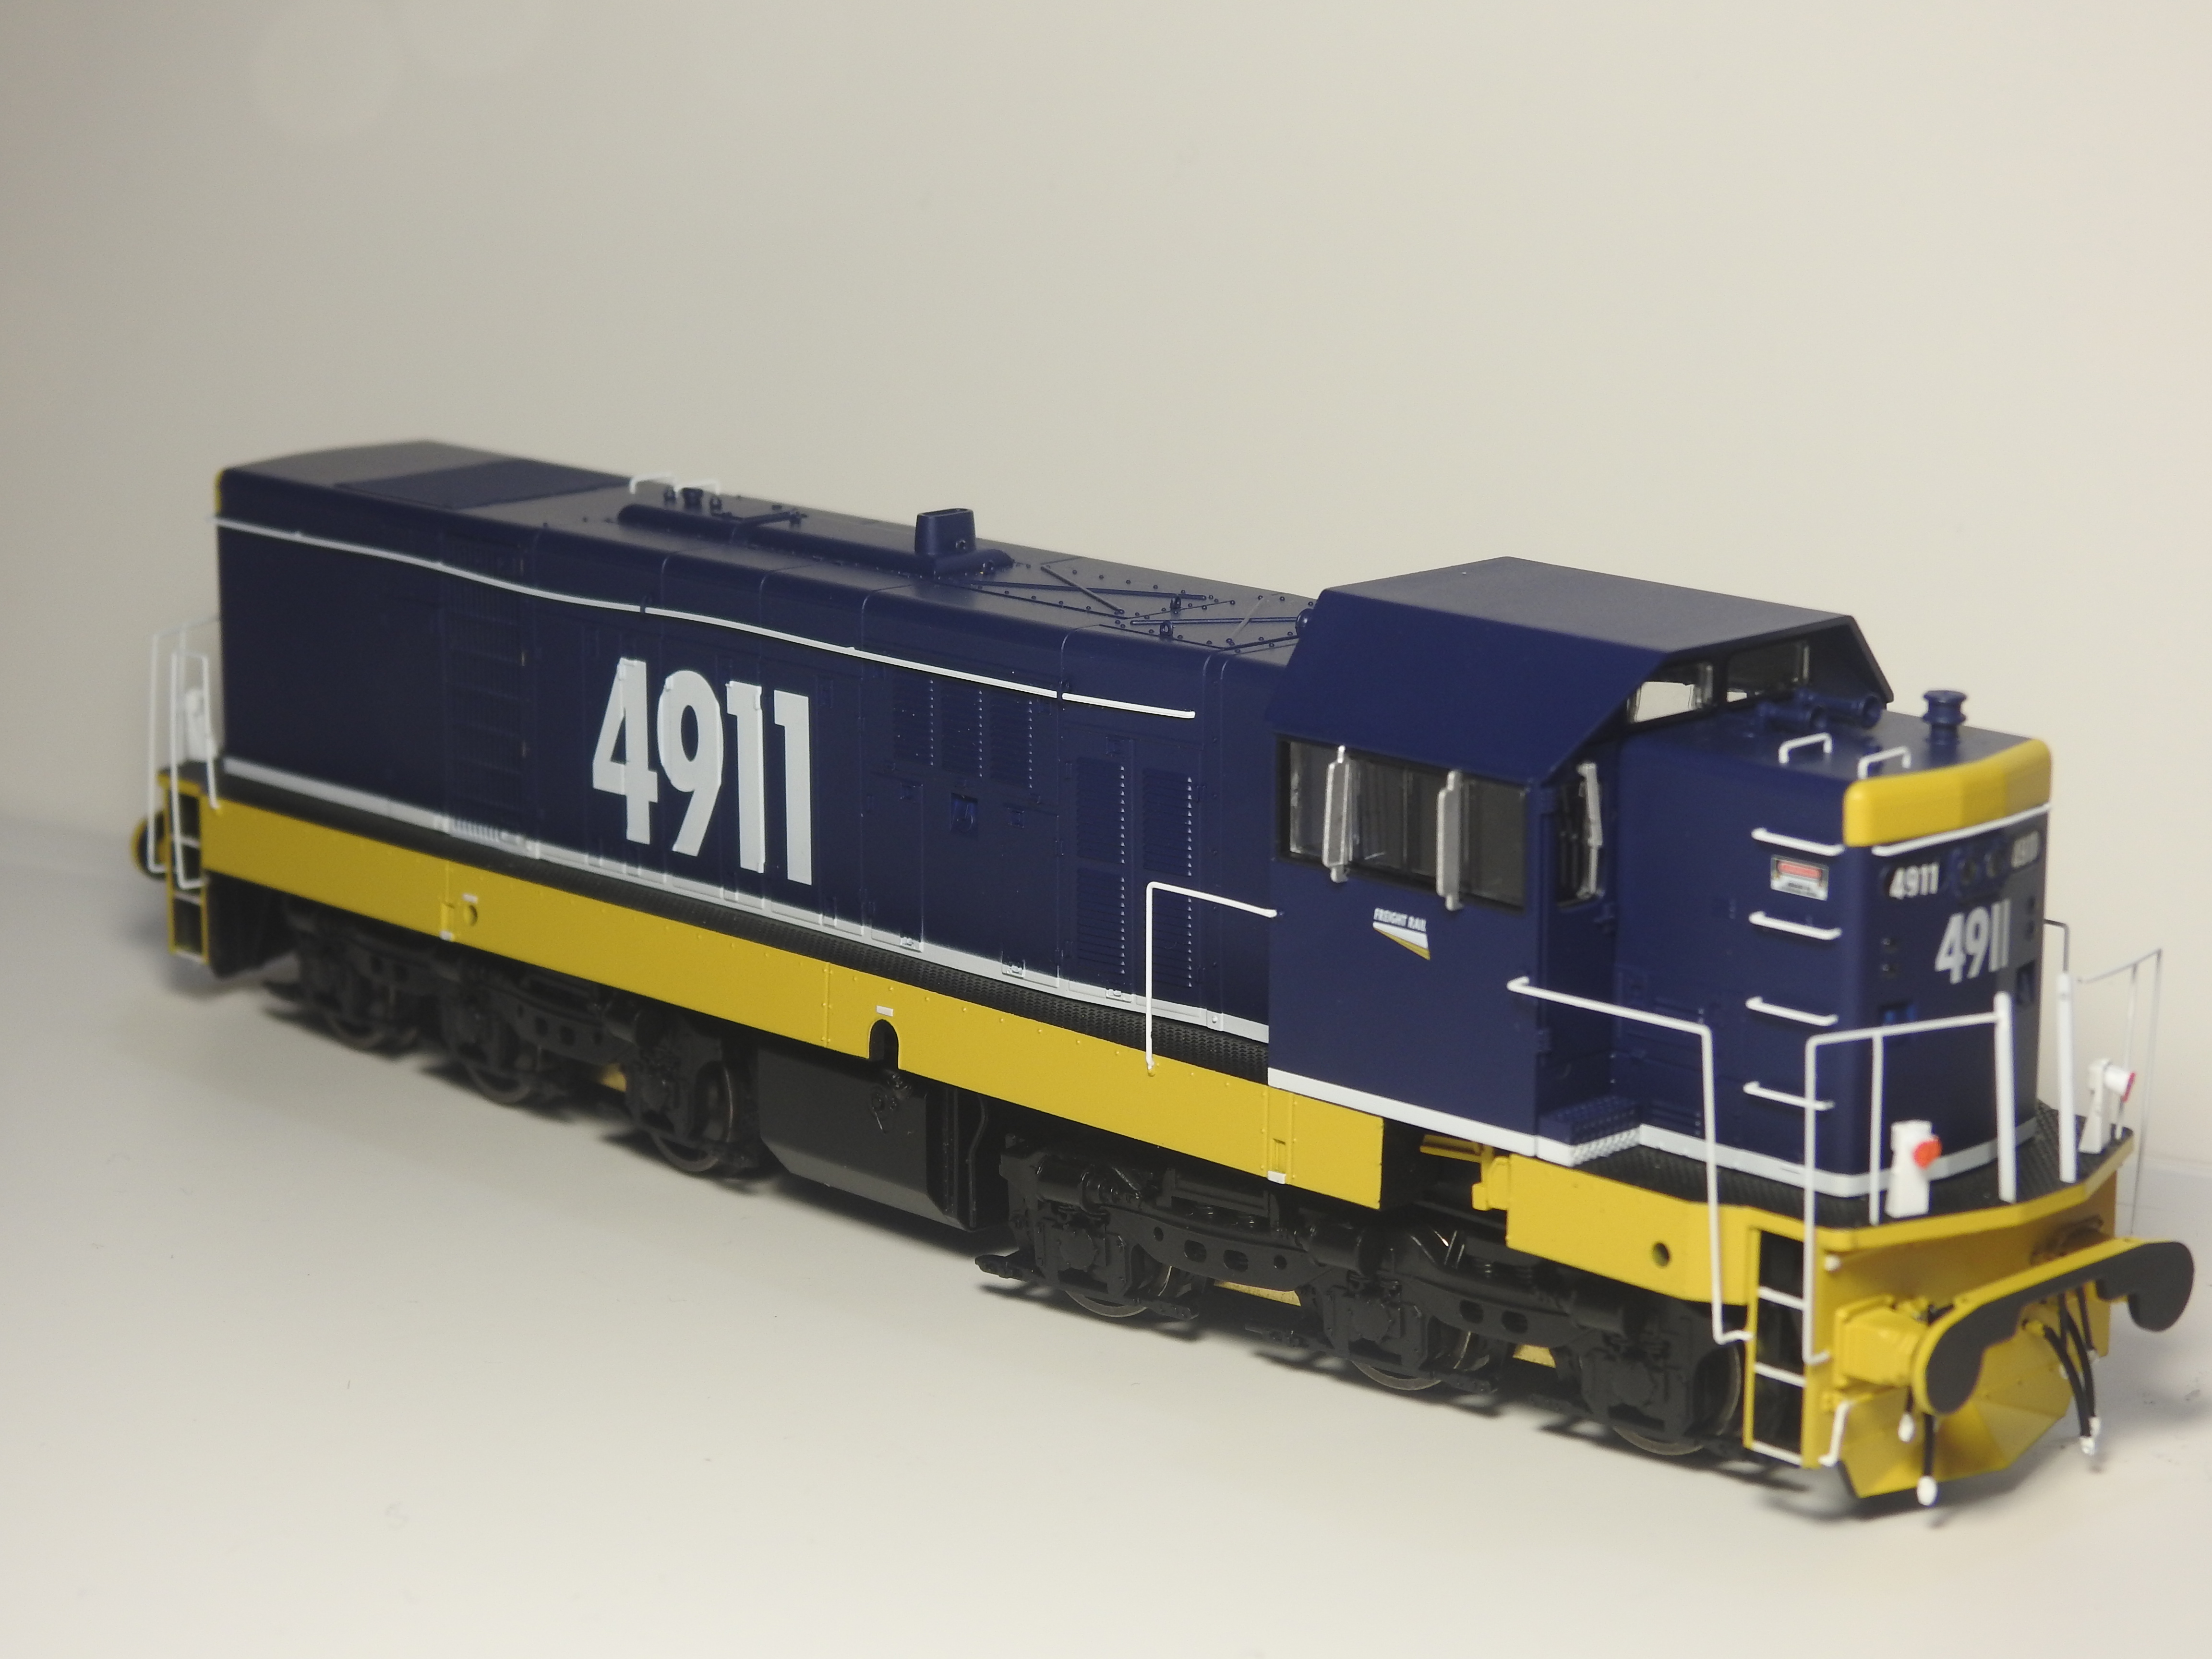 4911 - Freight Rail - Final Sample